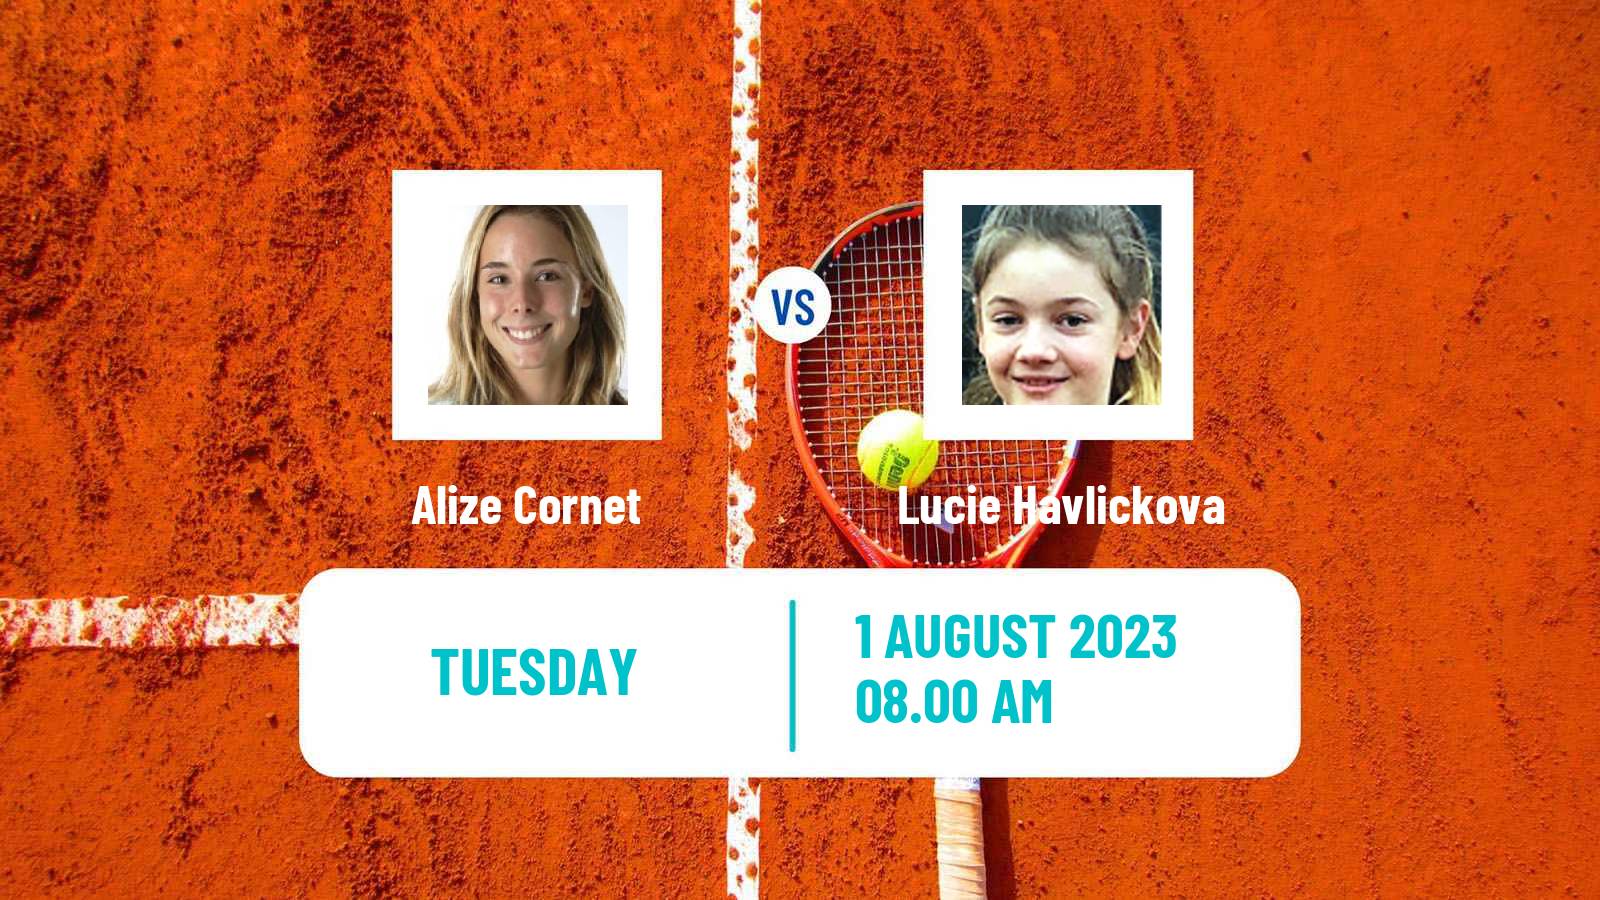 Tennis WTA Prague Alize Cornet - Lucie Havlickova